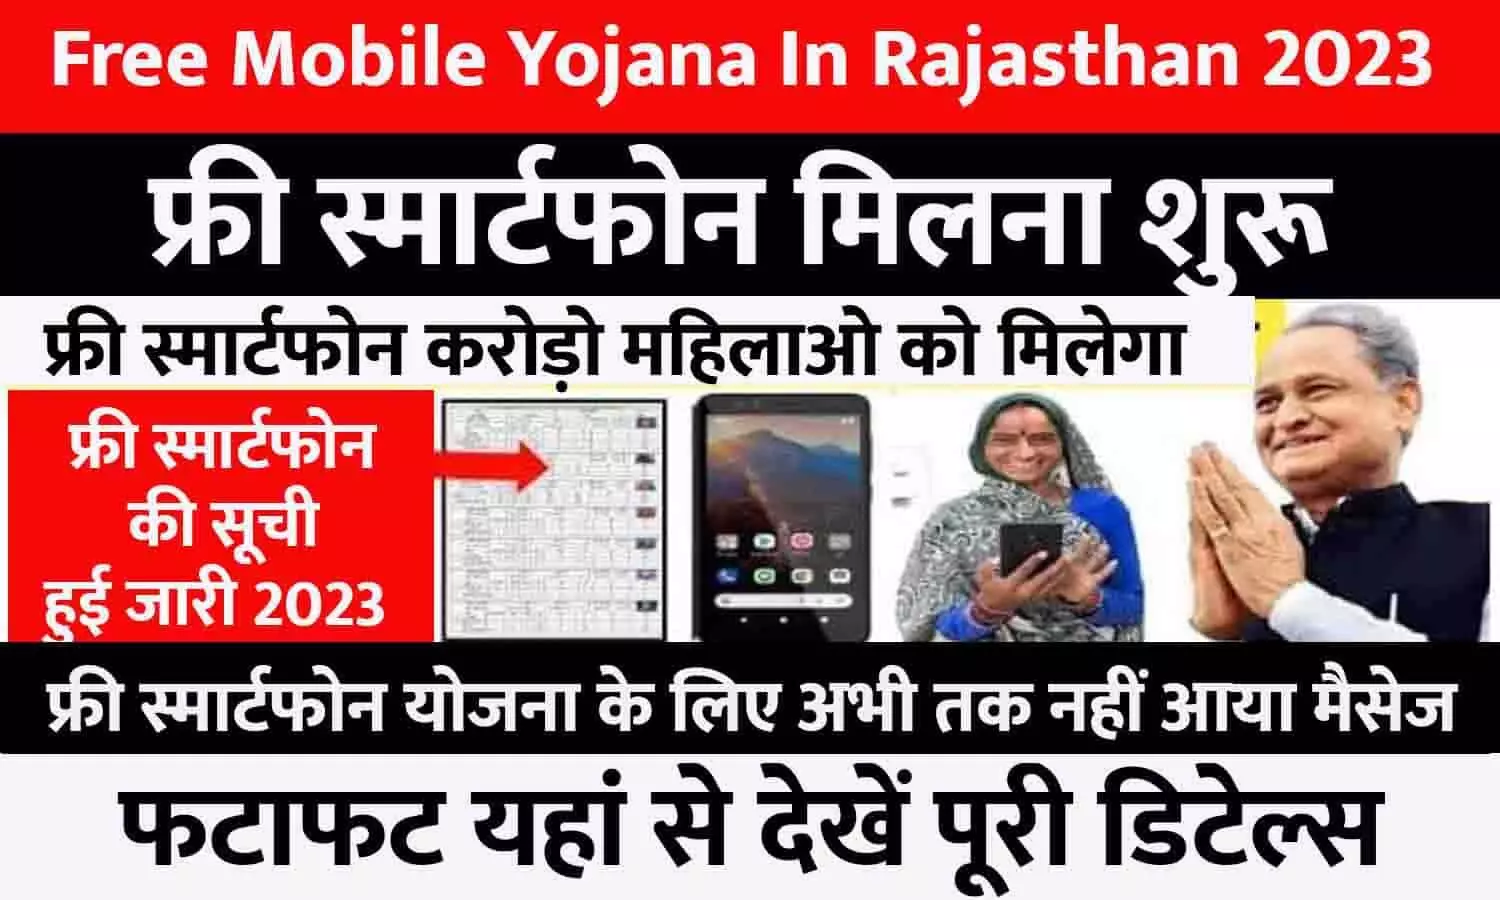 Rajasthan Indira Gandhi Free Mobile Yojana 2023 को लेकर बड़ा UPDATE